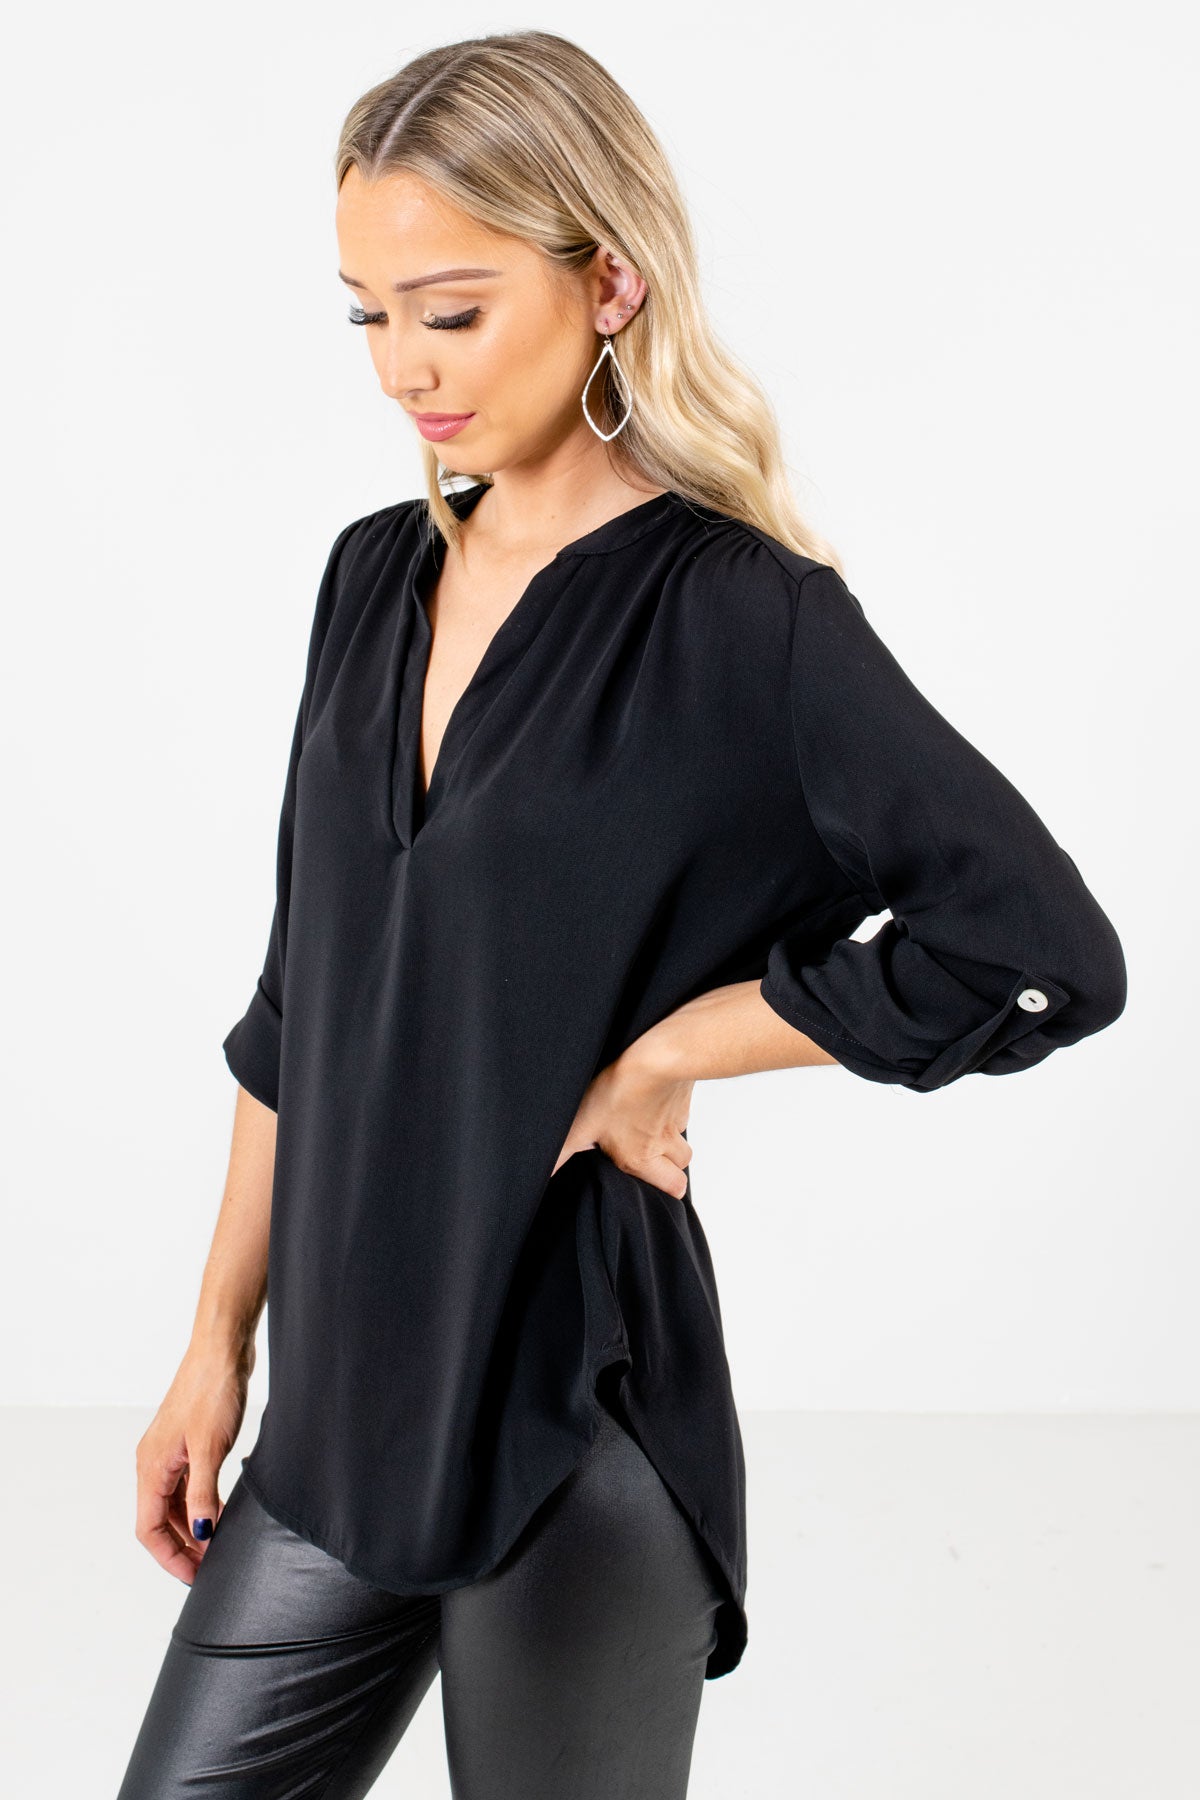 Black ¾ Length Sleeve Boutique Blouses for Women